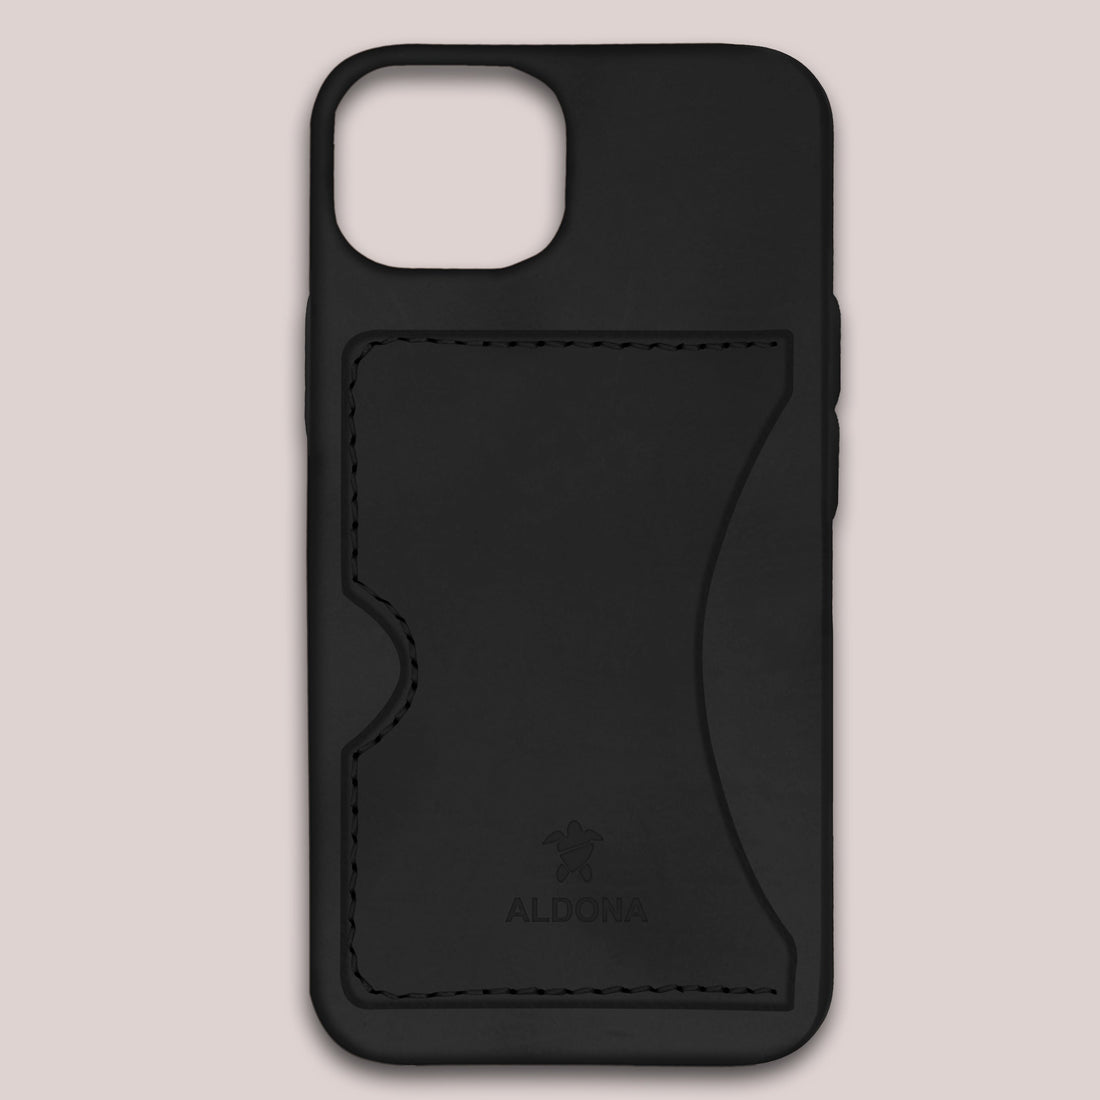 Baxter Card Case for iPhone 13 Mini - Onyx Black